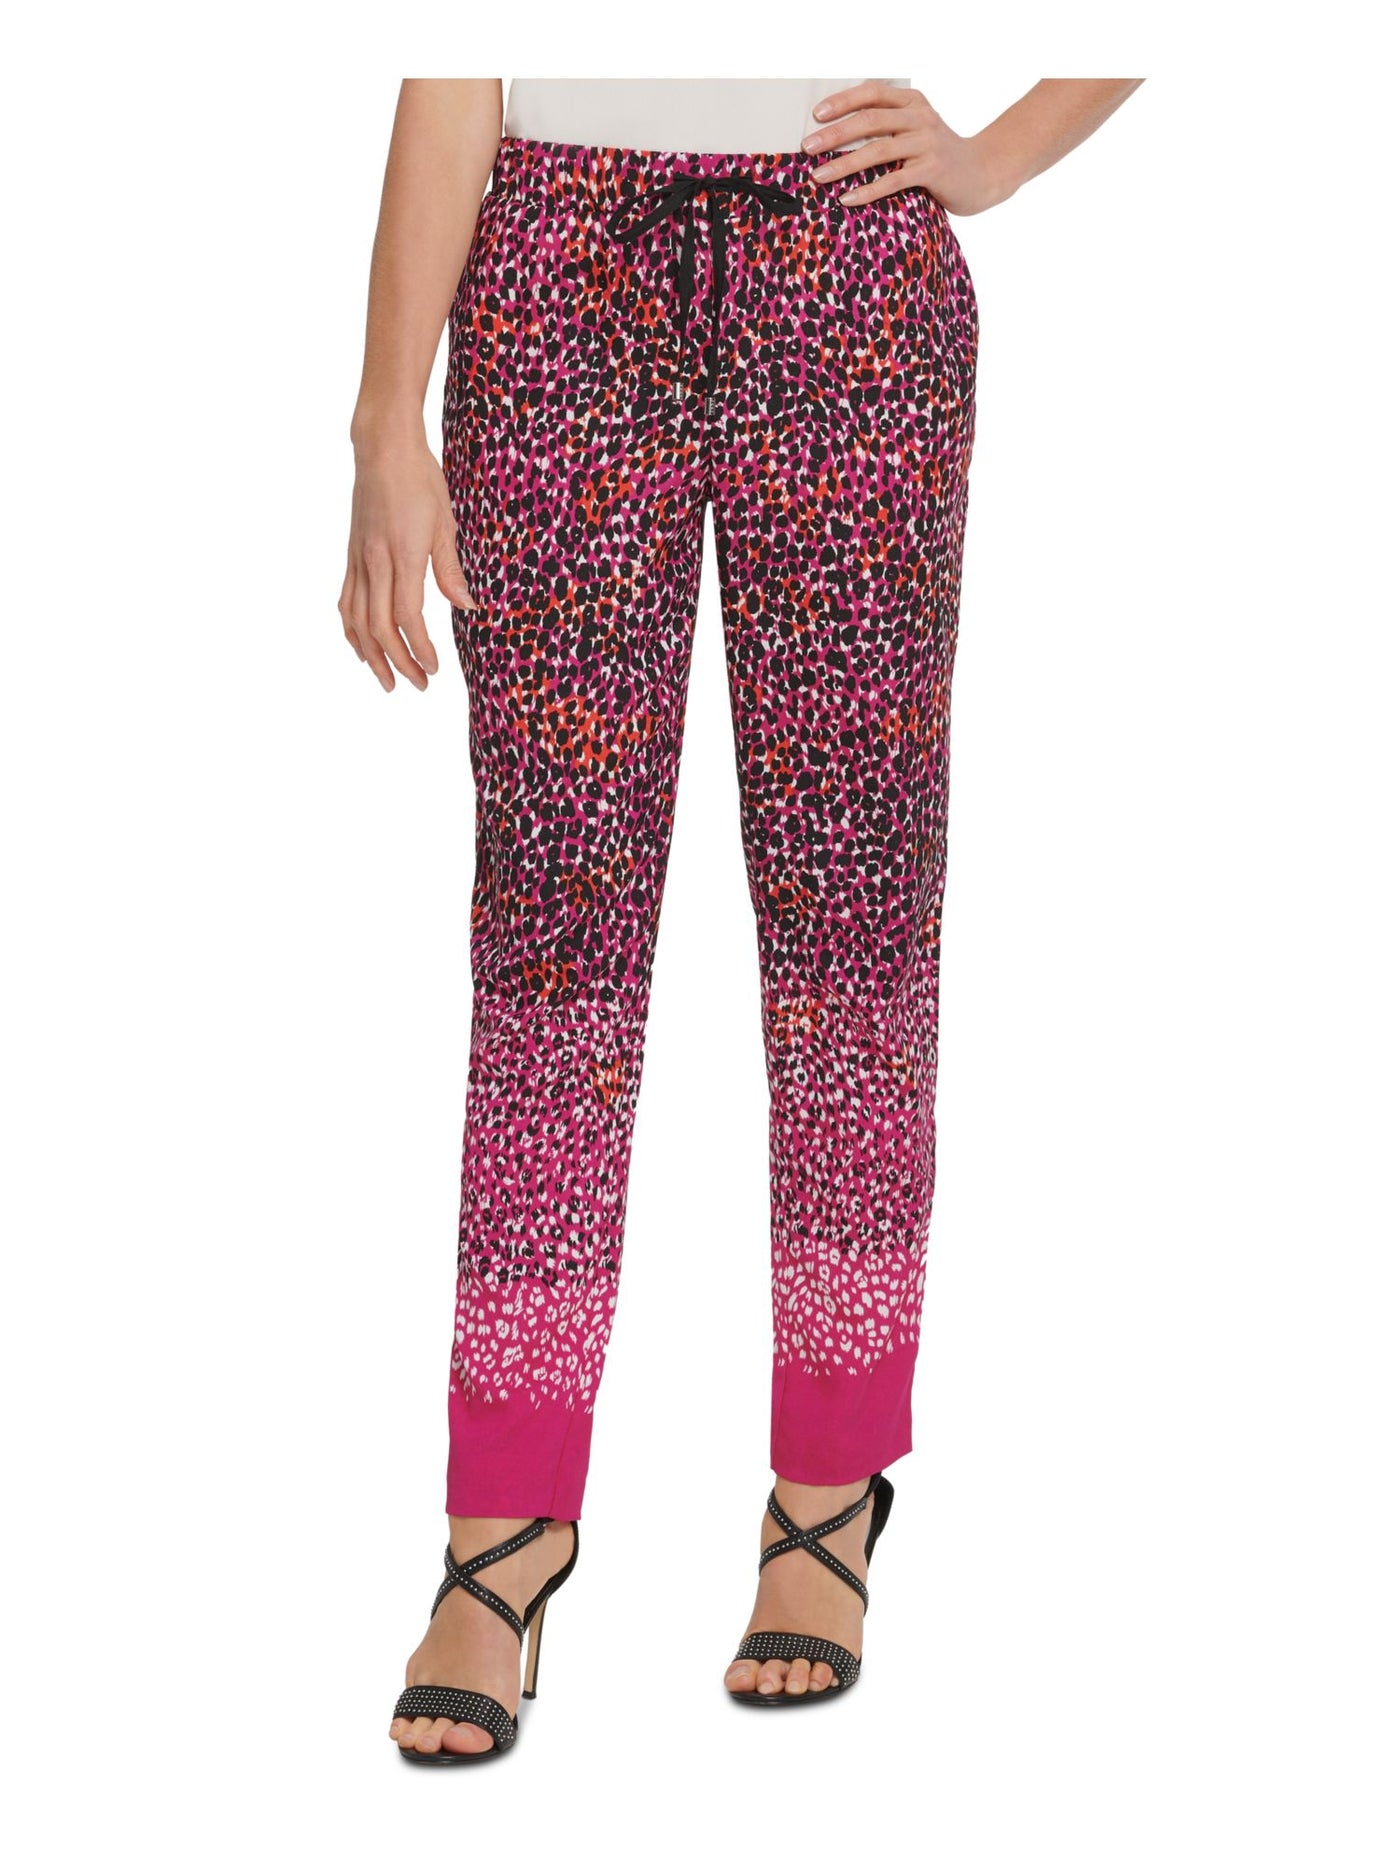 DKNY Womens Pink Animal Print Straight leg Pants S